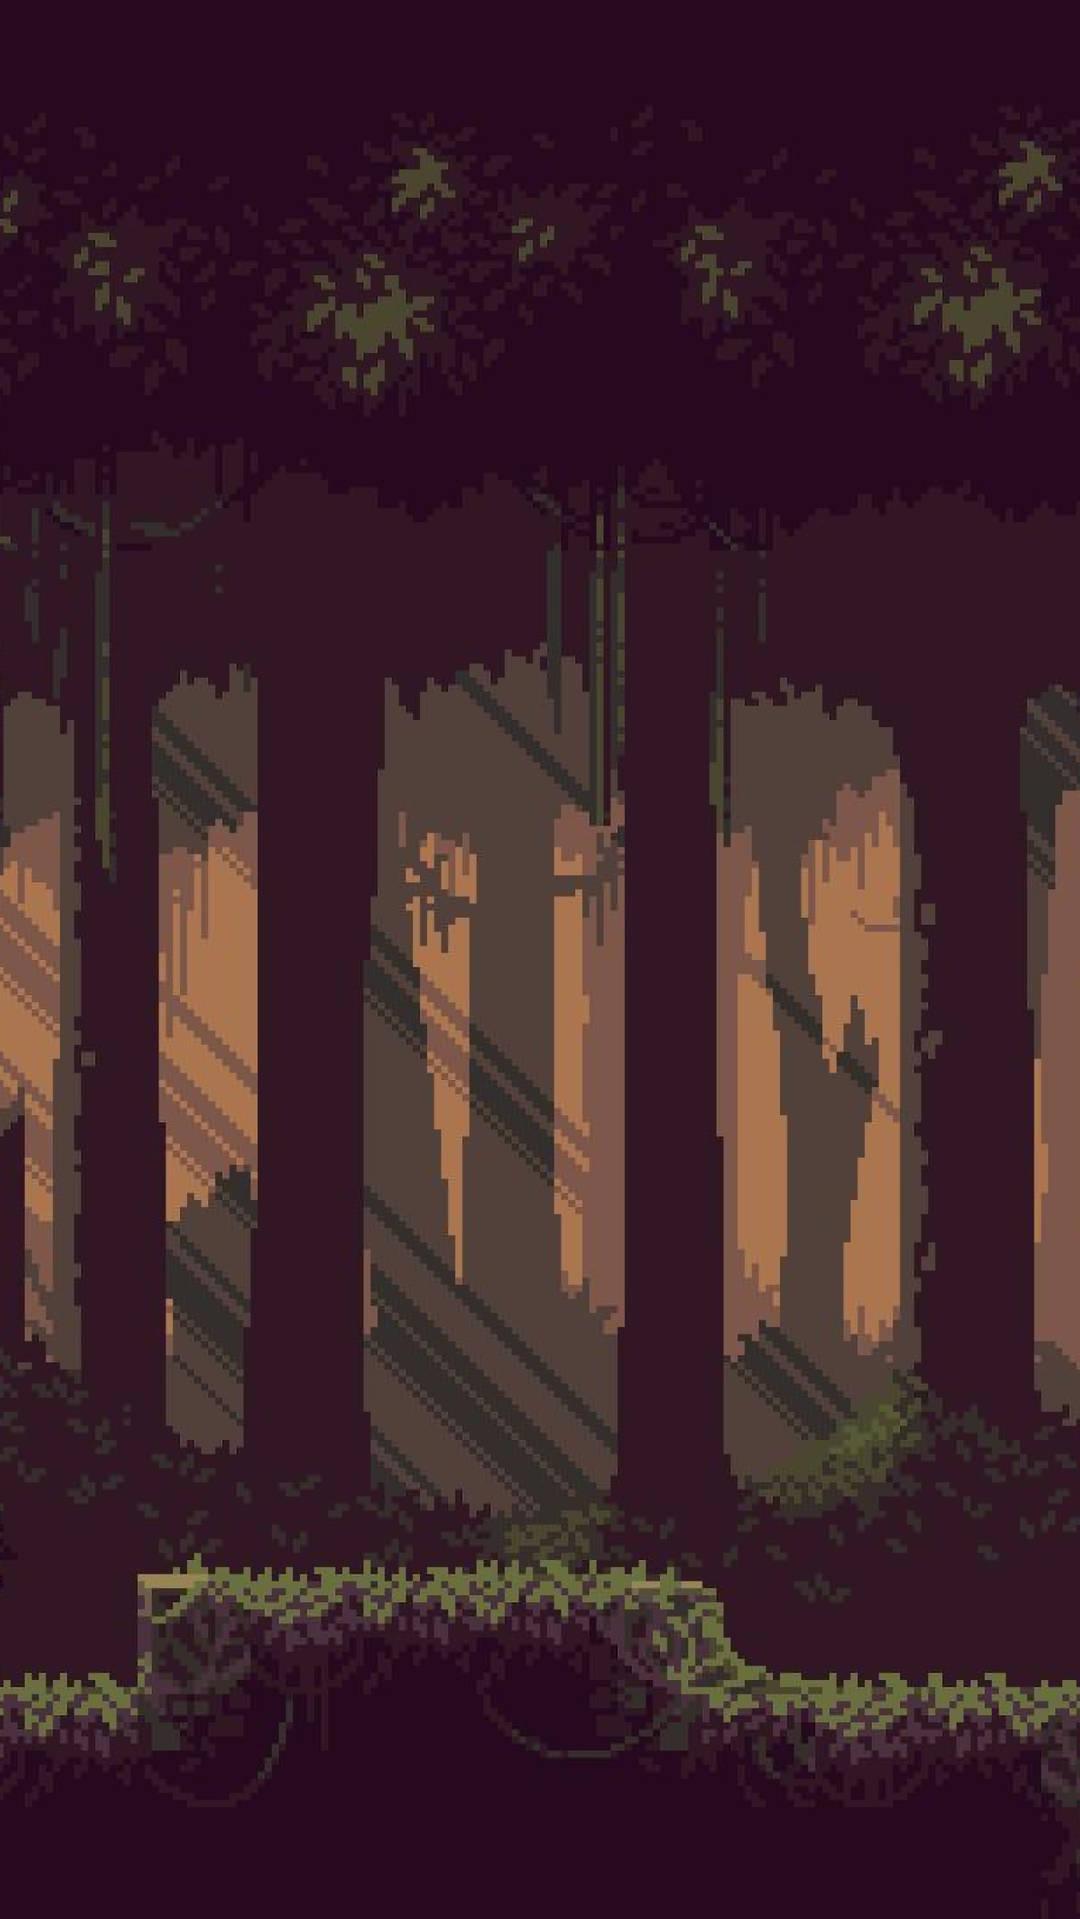 Brown Forest In Aesthetic Pixel Art Wallpaper